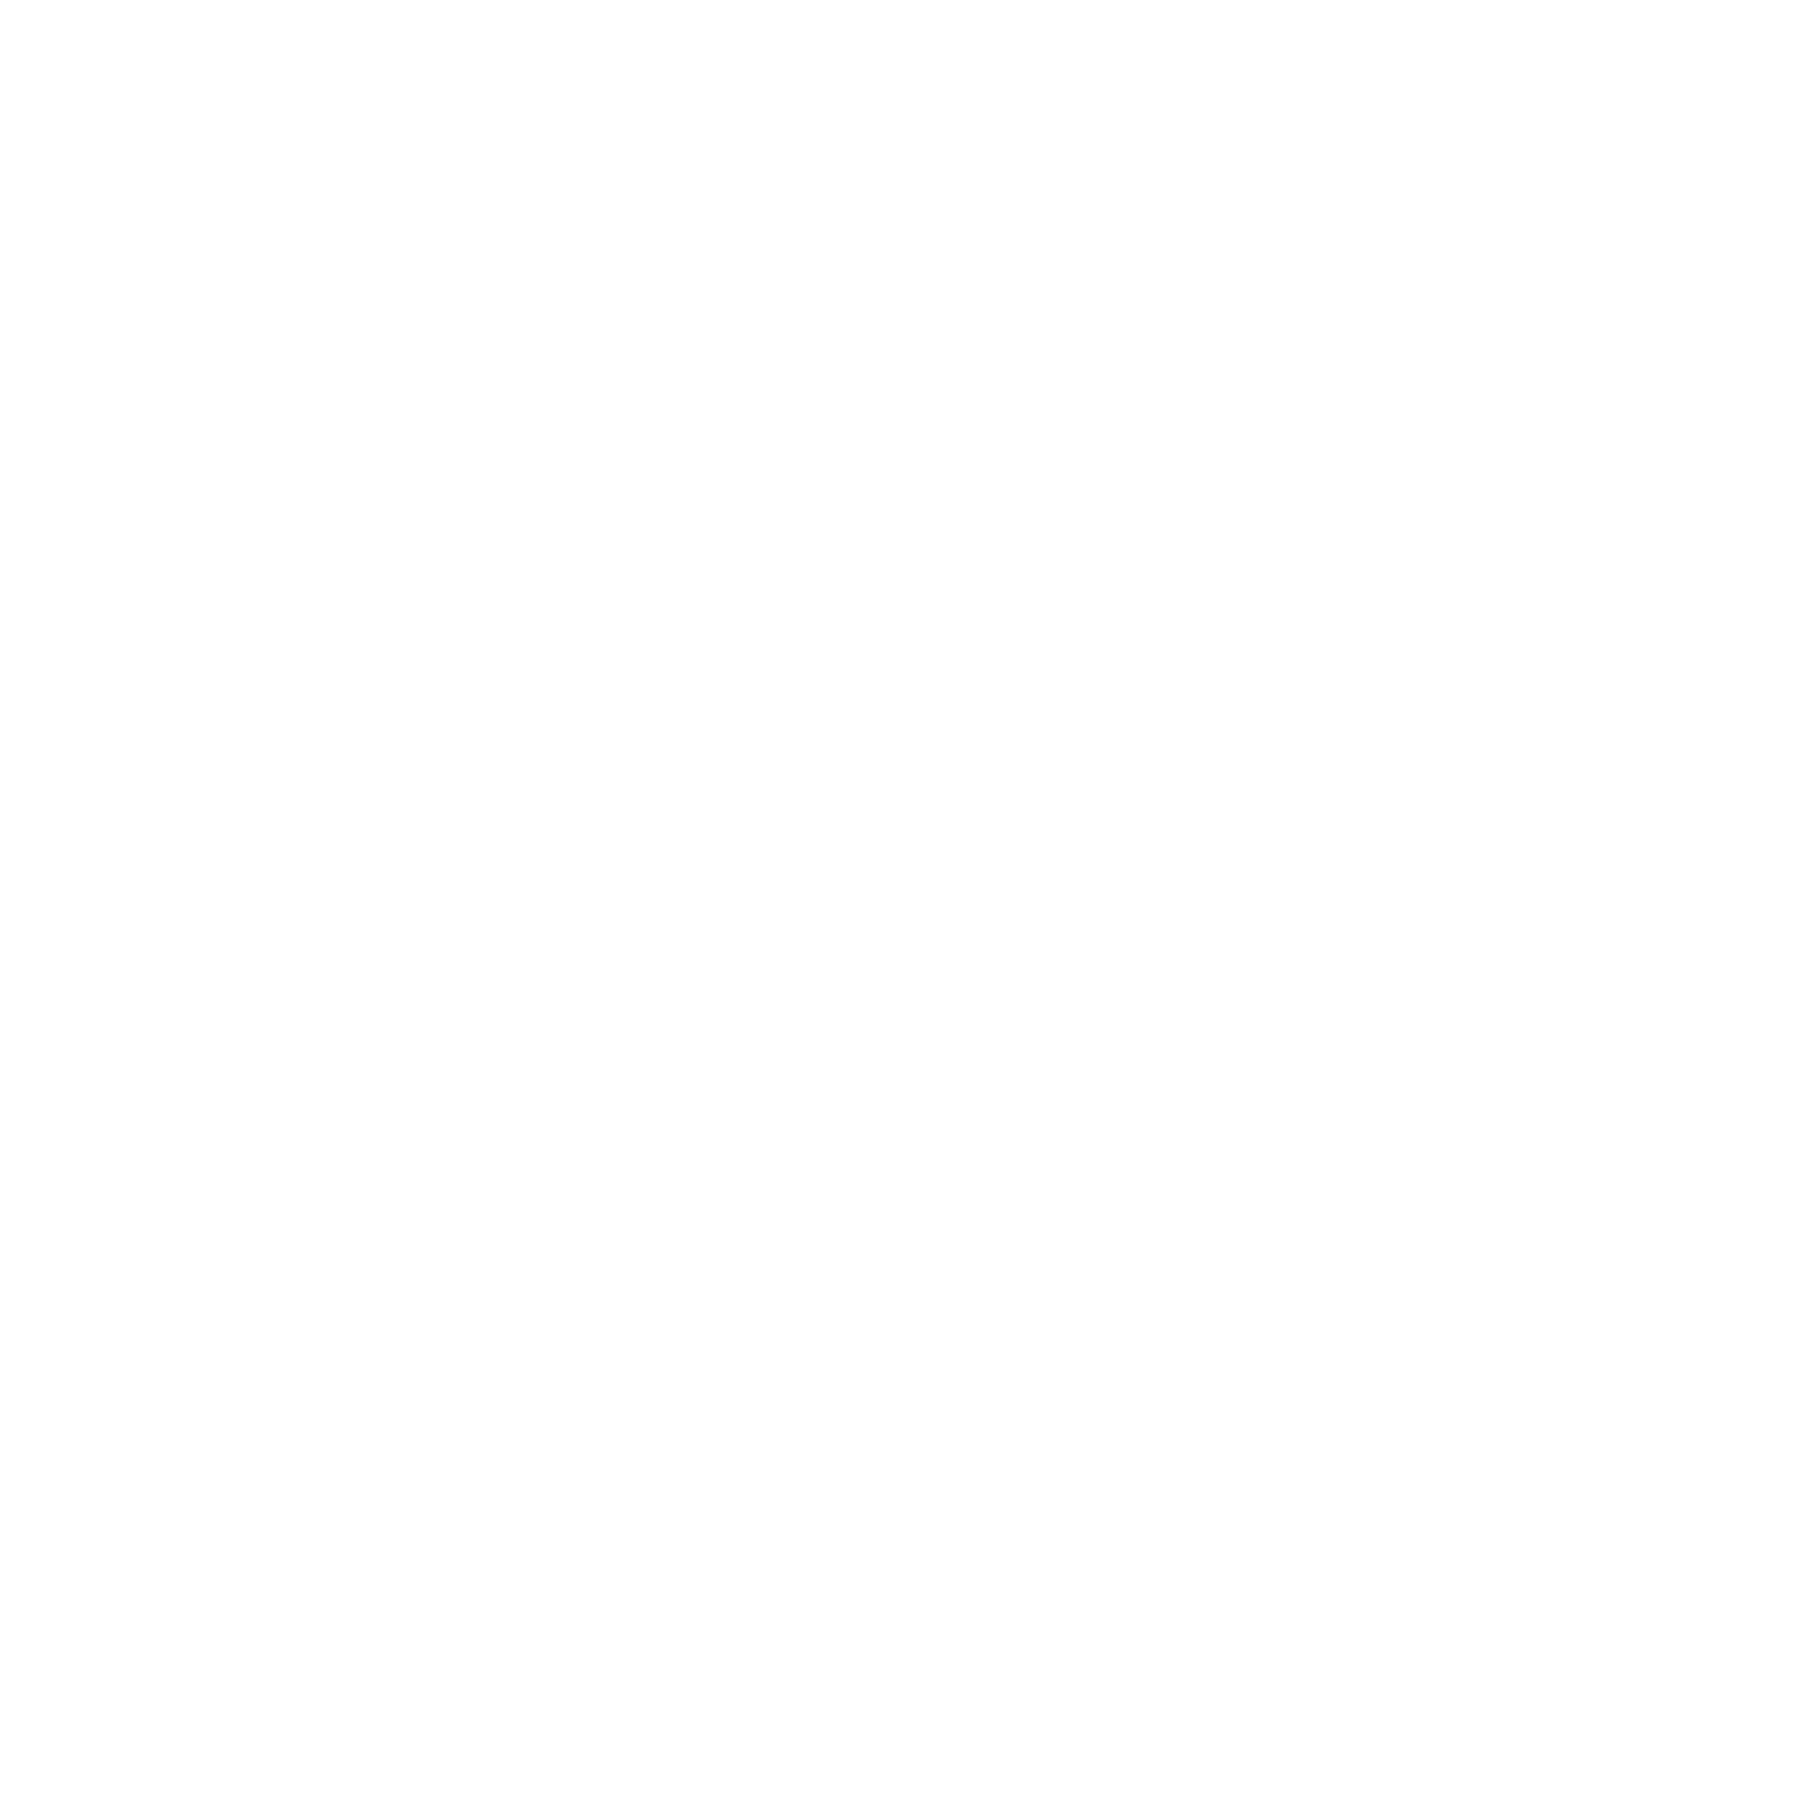 NOBAist - Music for Marketing